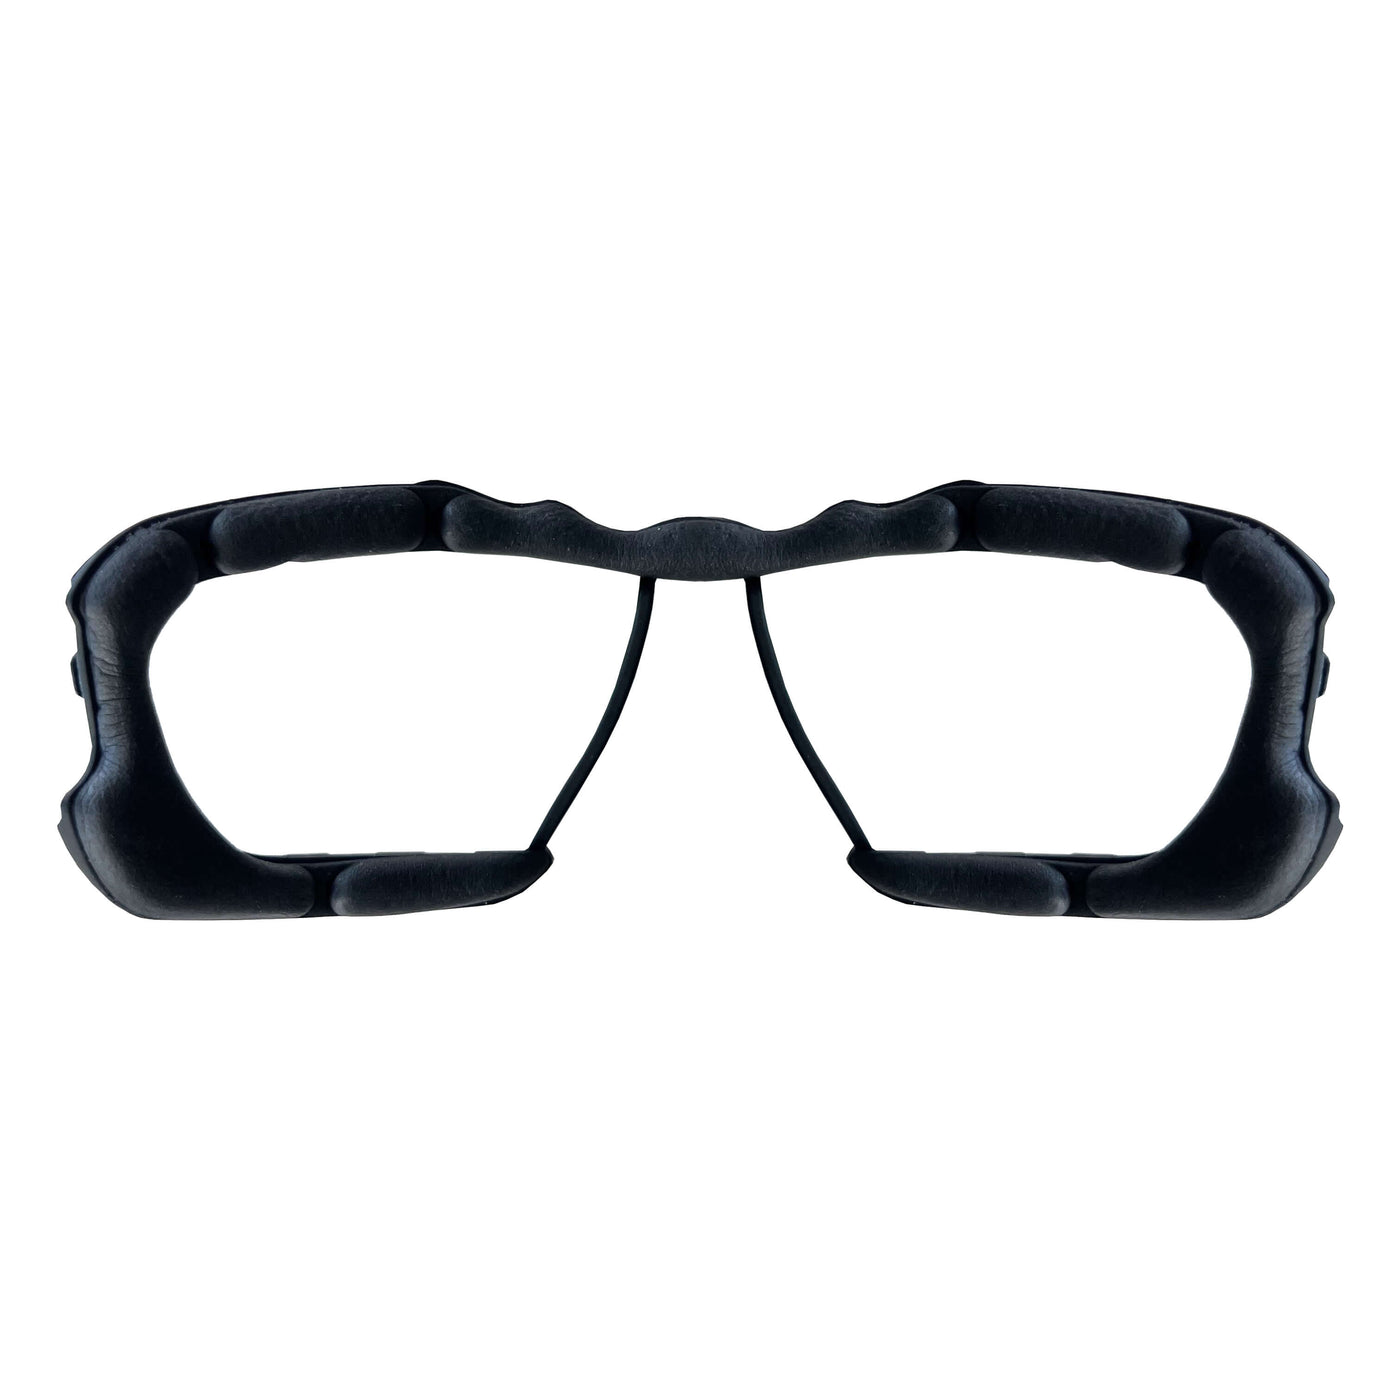 Polarized Sunglasses | Extreme-Sports Strap UV400 | Platinum Sun